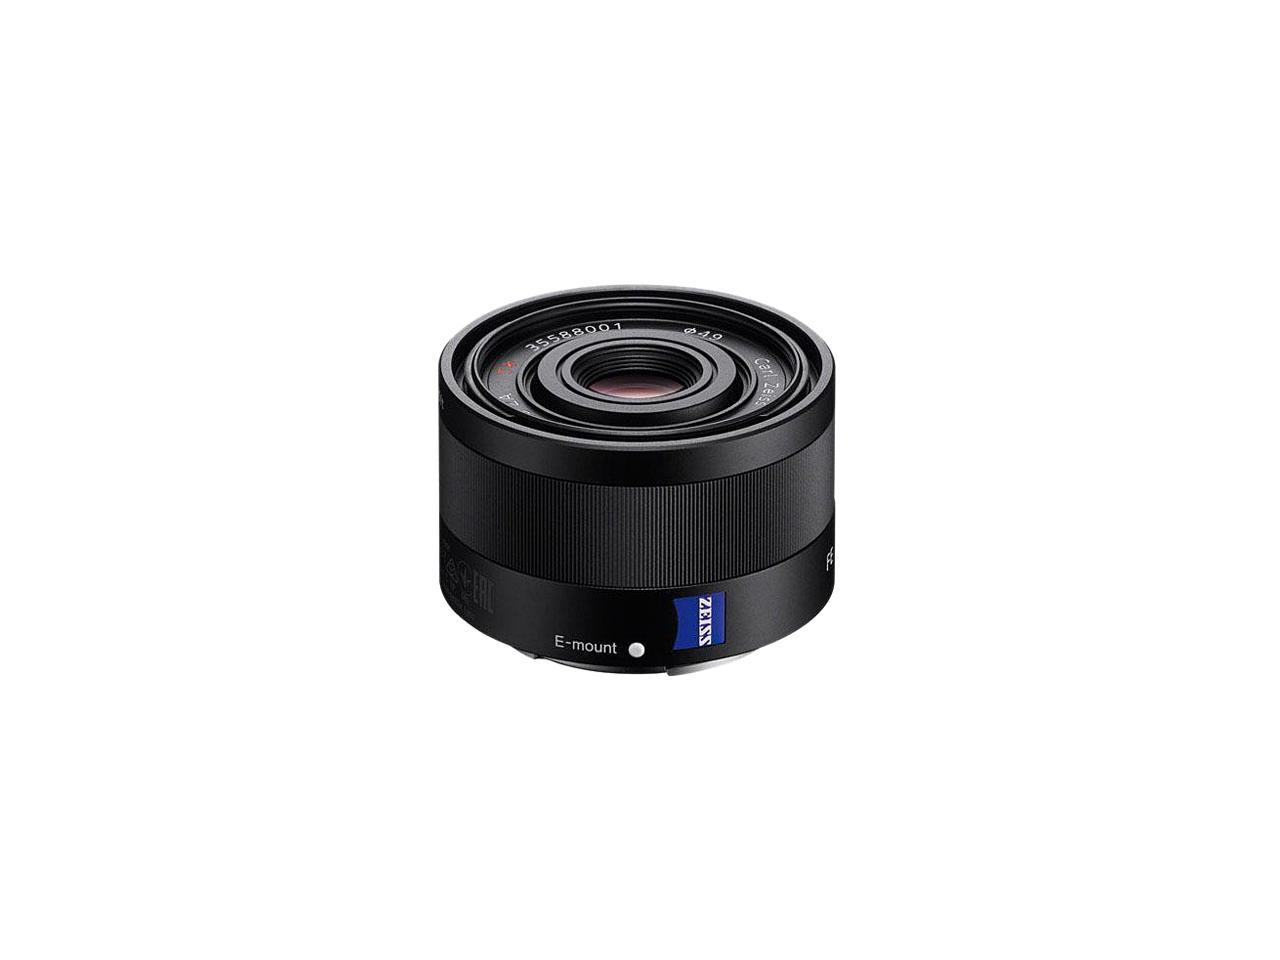 SONY SEL35F28Z Compact ILC Lenses Sonnar T FE 35mm F2.8 ZA Lens Black